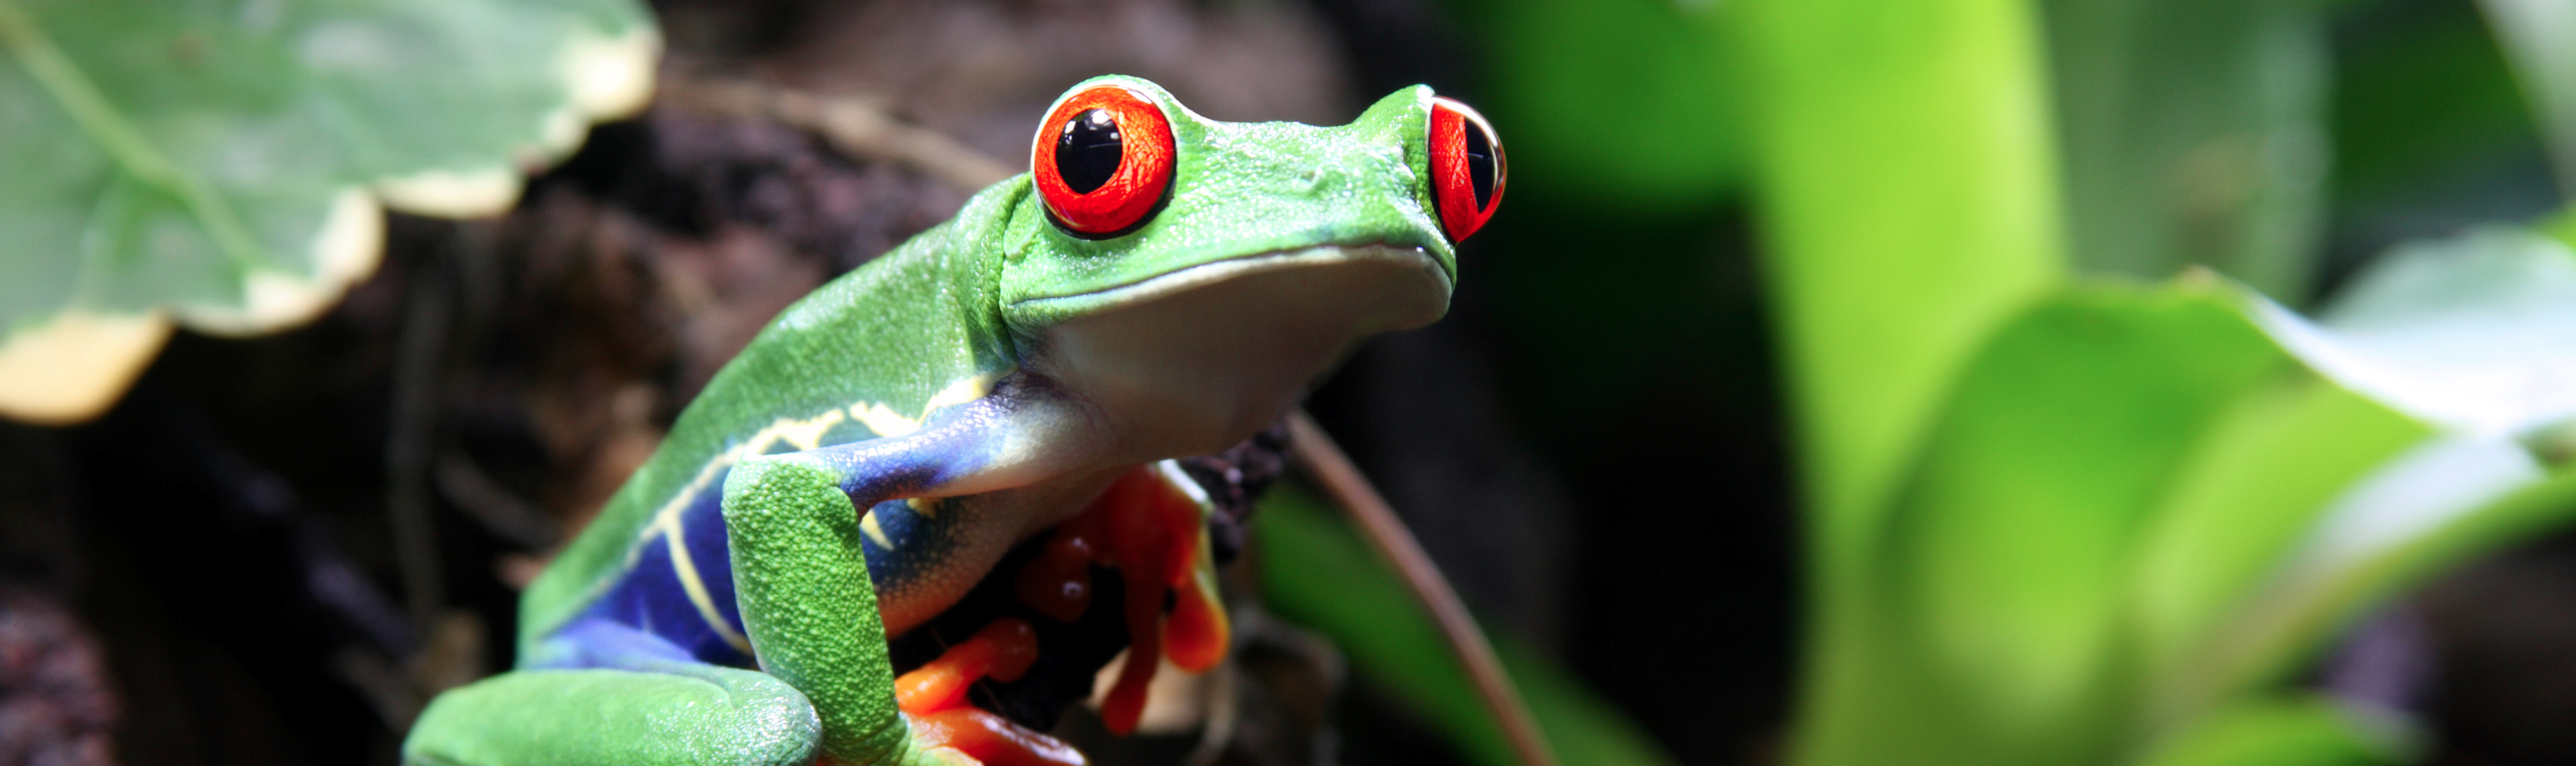 Red-Eyed Tree Frog (Agalychnis callidryas) | Rainforest Alliance